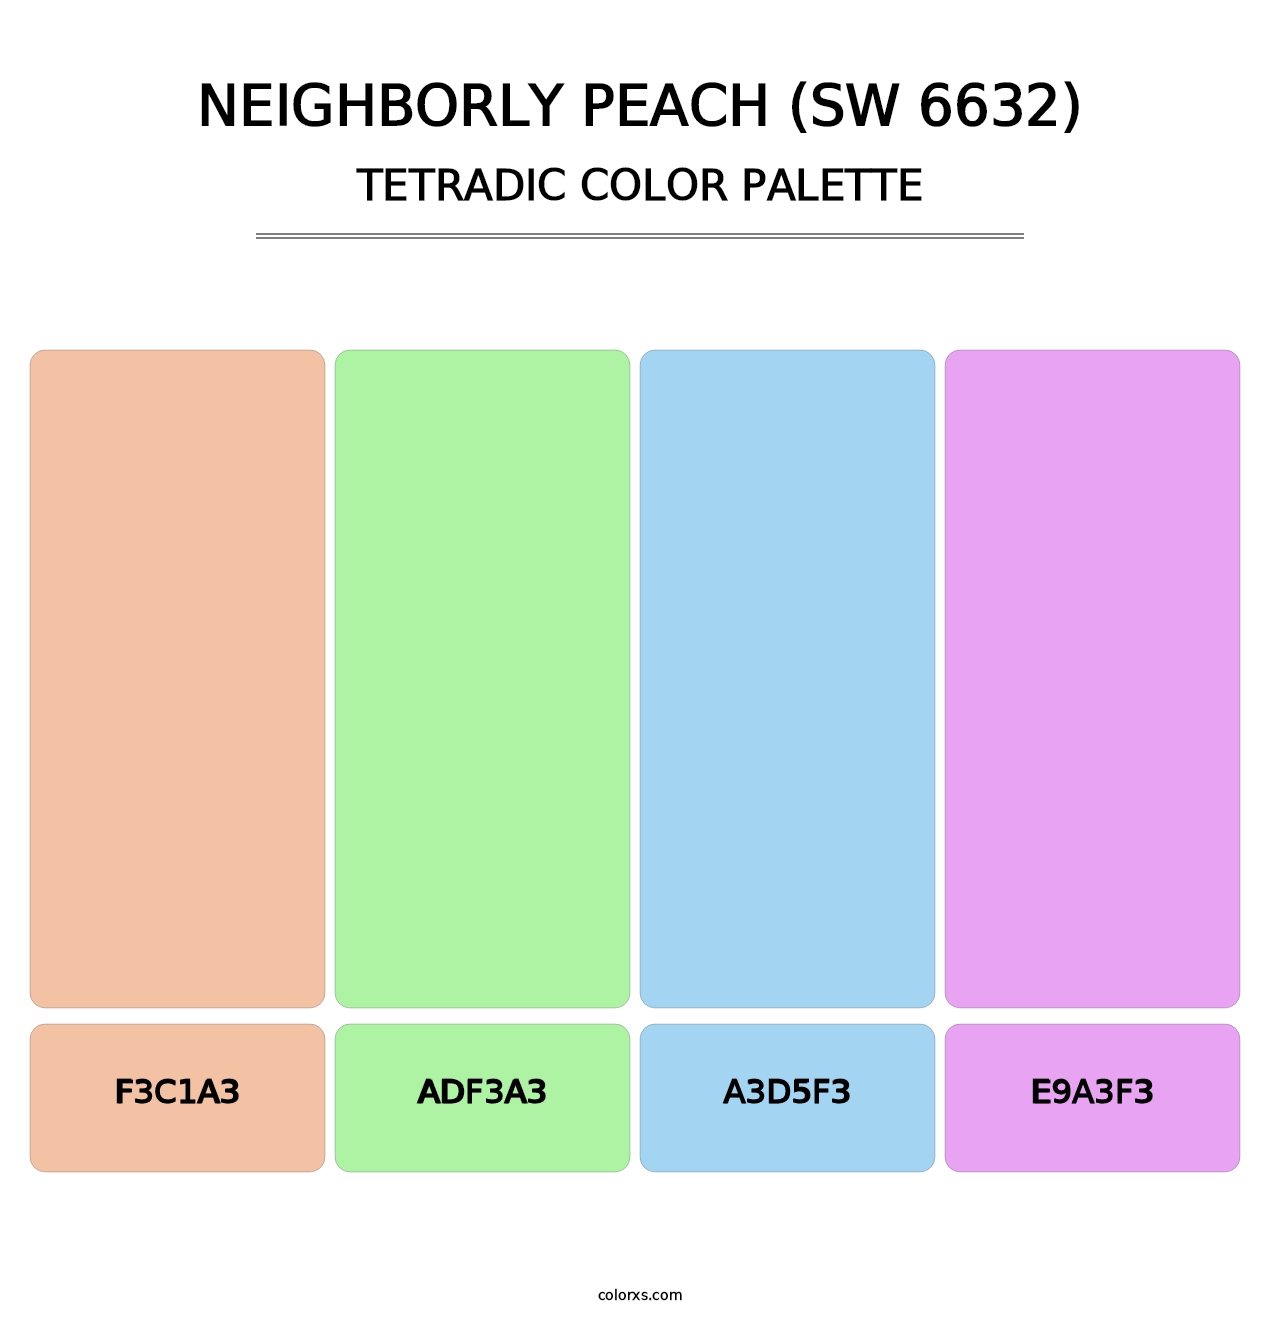 Neighborly Peach (SW 6632) - Tetradic Color Palette